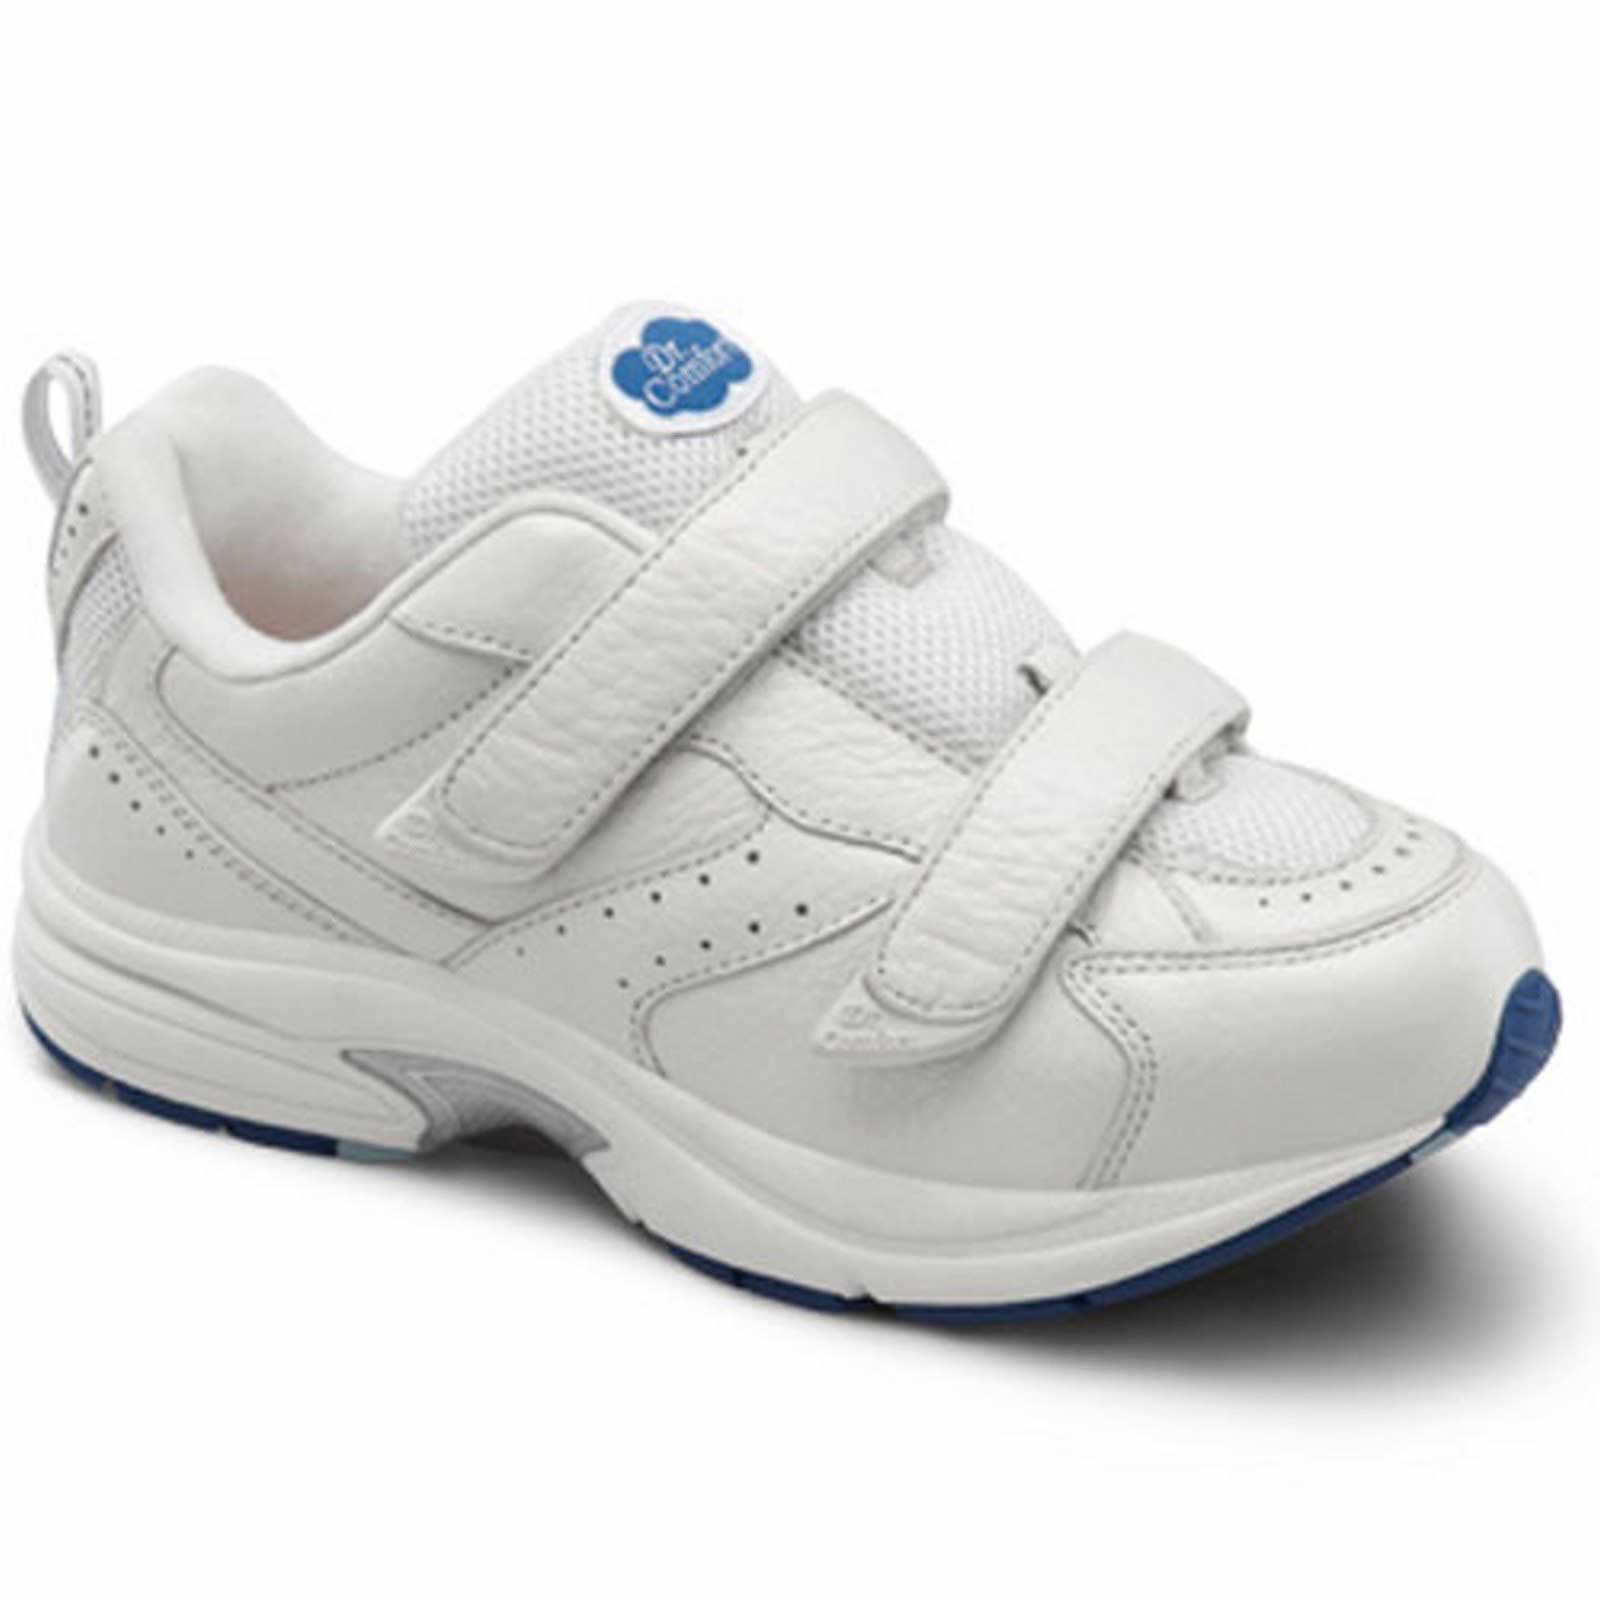 Dr. Comfort Shoes Spirit-X Women's Athletic Shoe - Comfort Orthopedic Diabetic Shoe - Double Depth - Extra Wide